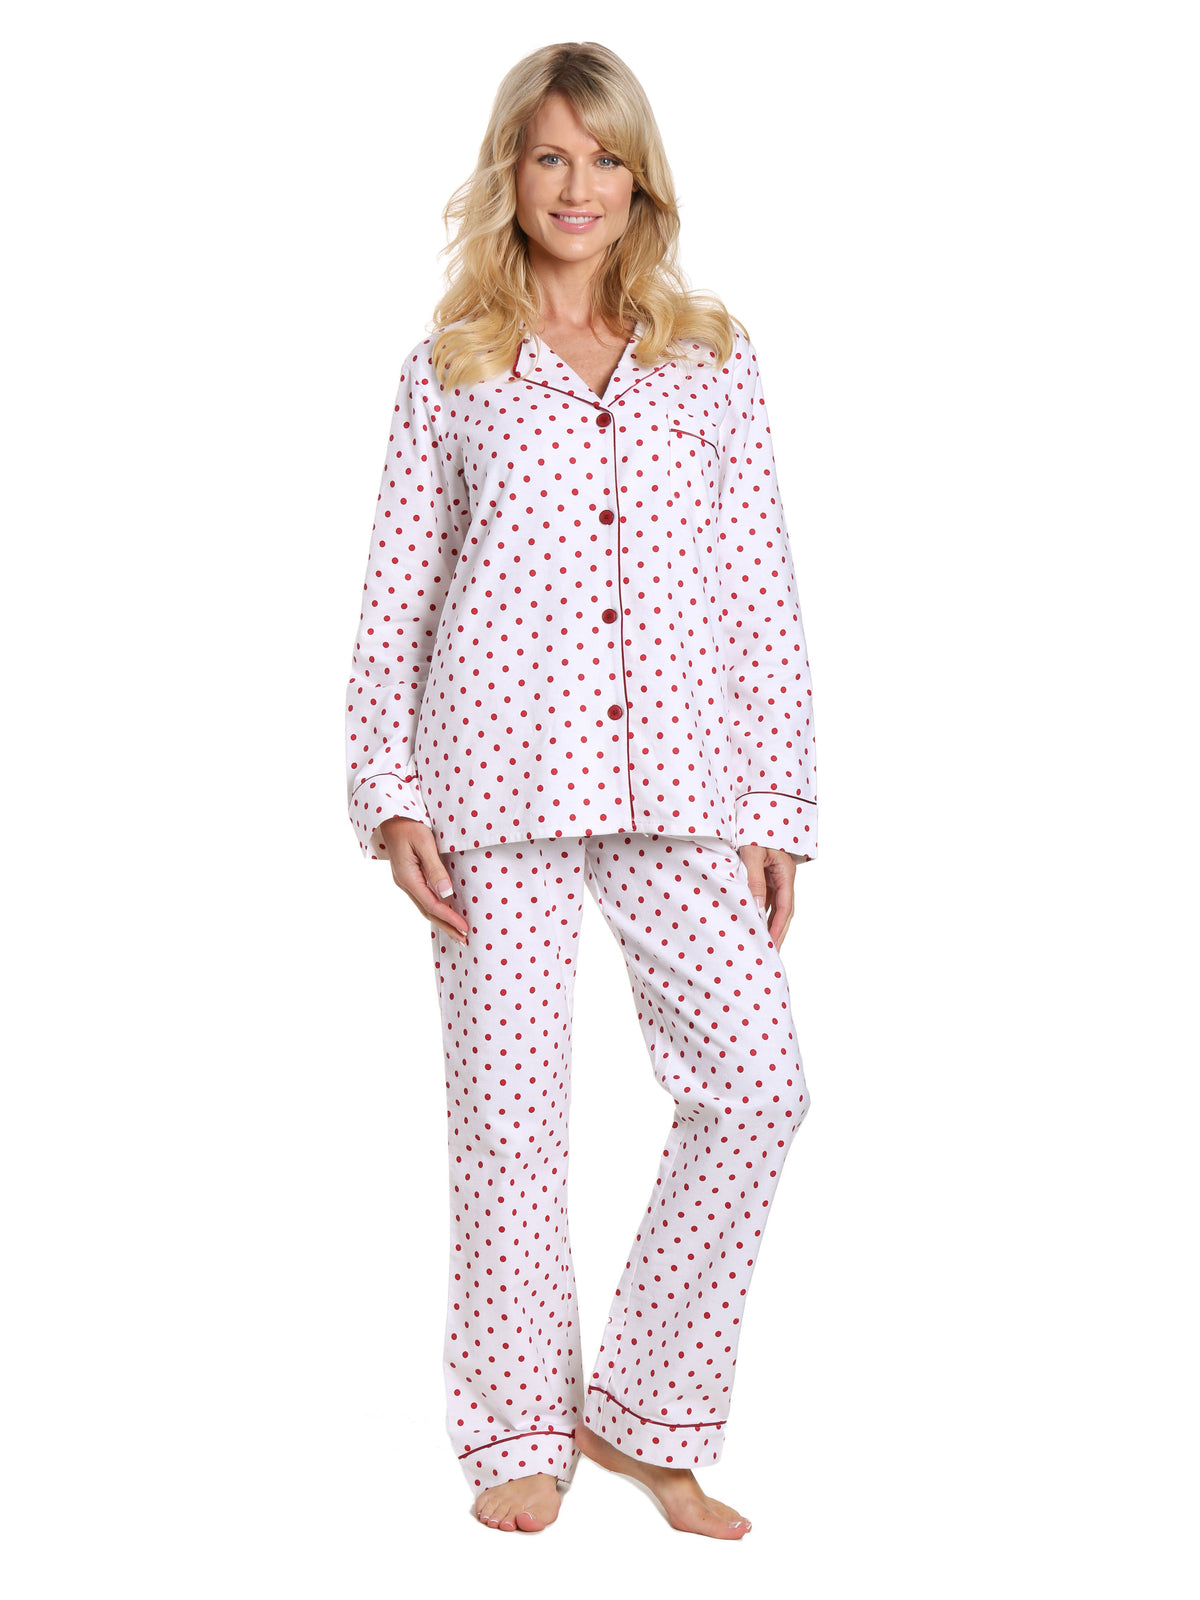 Womens Premium 100% Cotton Flannel Pajama Sleepwear Set - Dots Diva White-Red